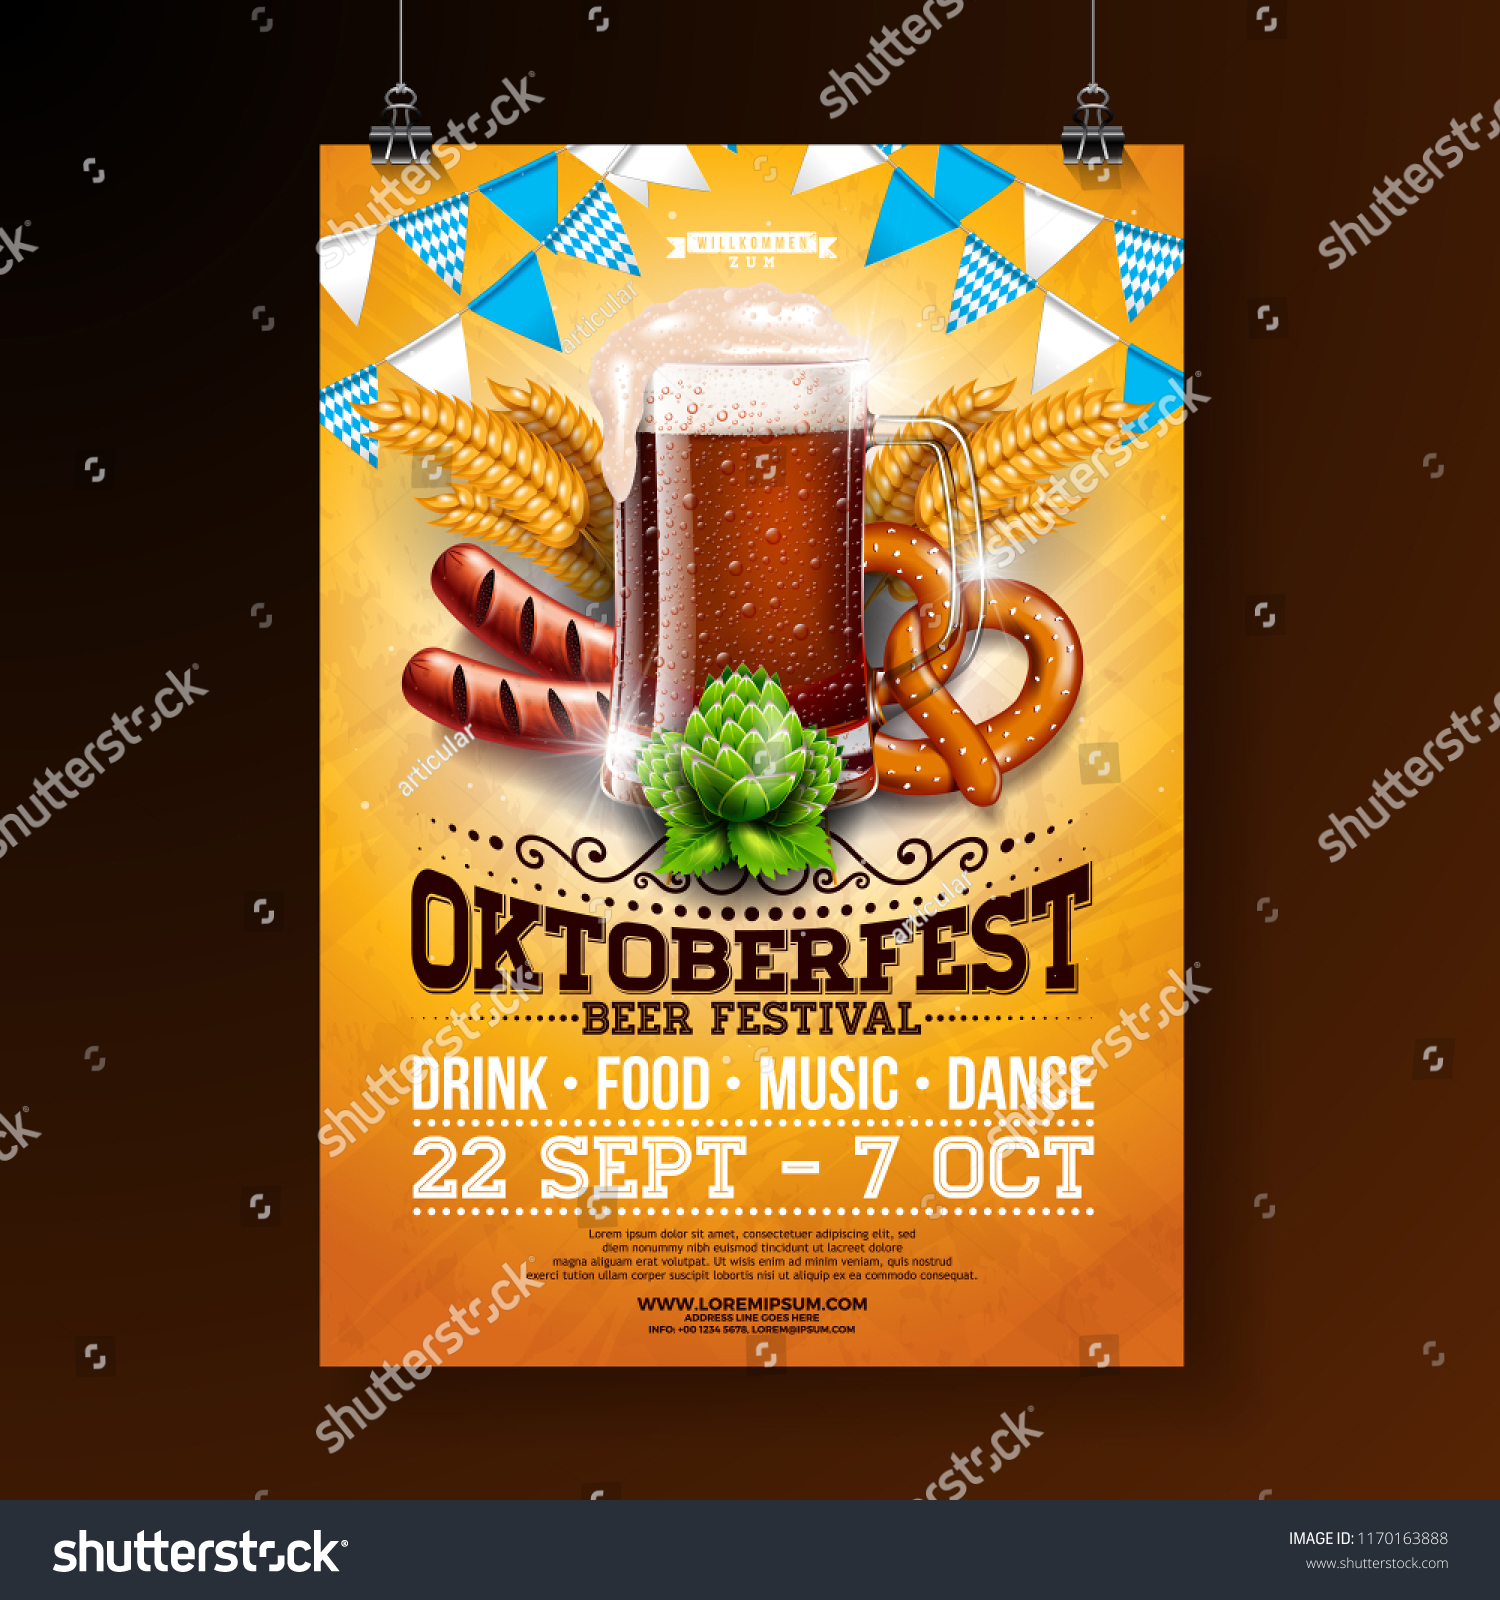 27,400 Oktoberfest poster Images, Stock Photos & Vectors | Shutterstock